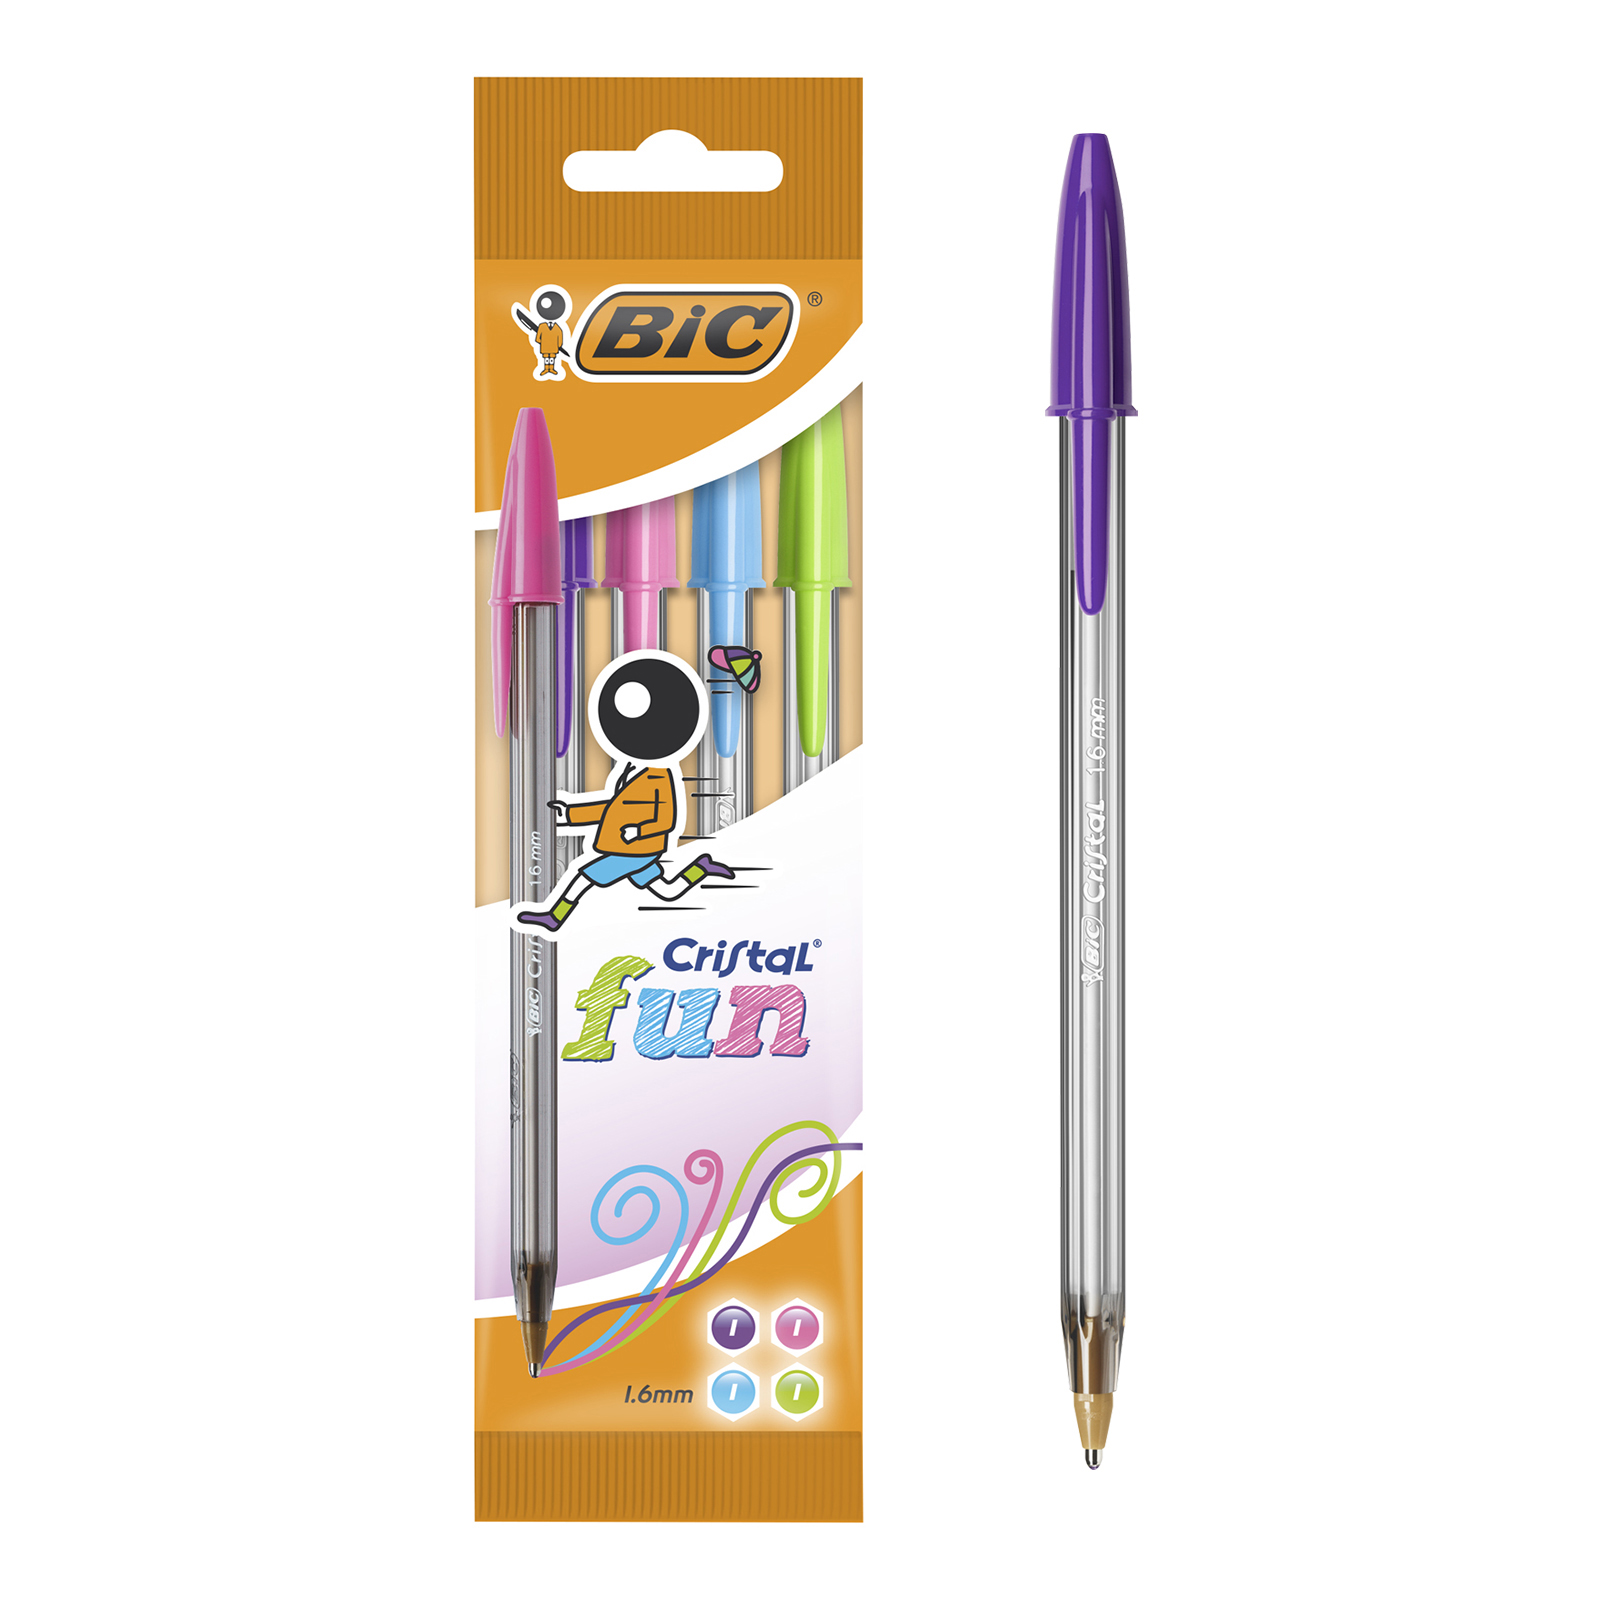 Bic  Στυλό Cristal 1.6 Fun Pouch 4  8957921 - Bic